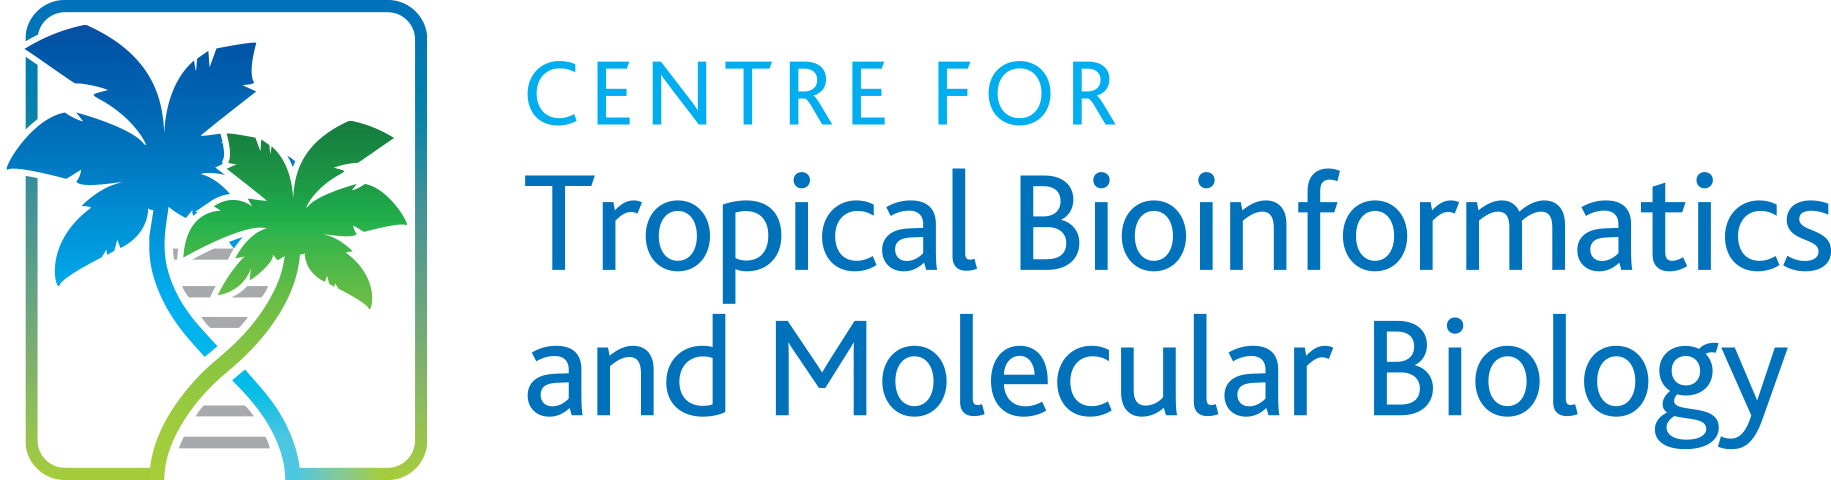 Centre for Tropical Bioinformatics and Molecular Biology logo. 